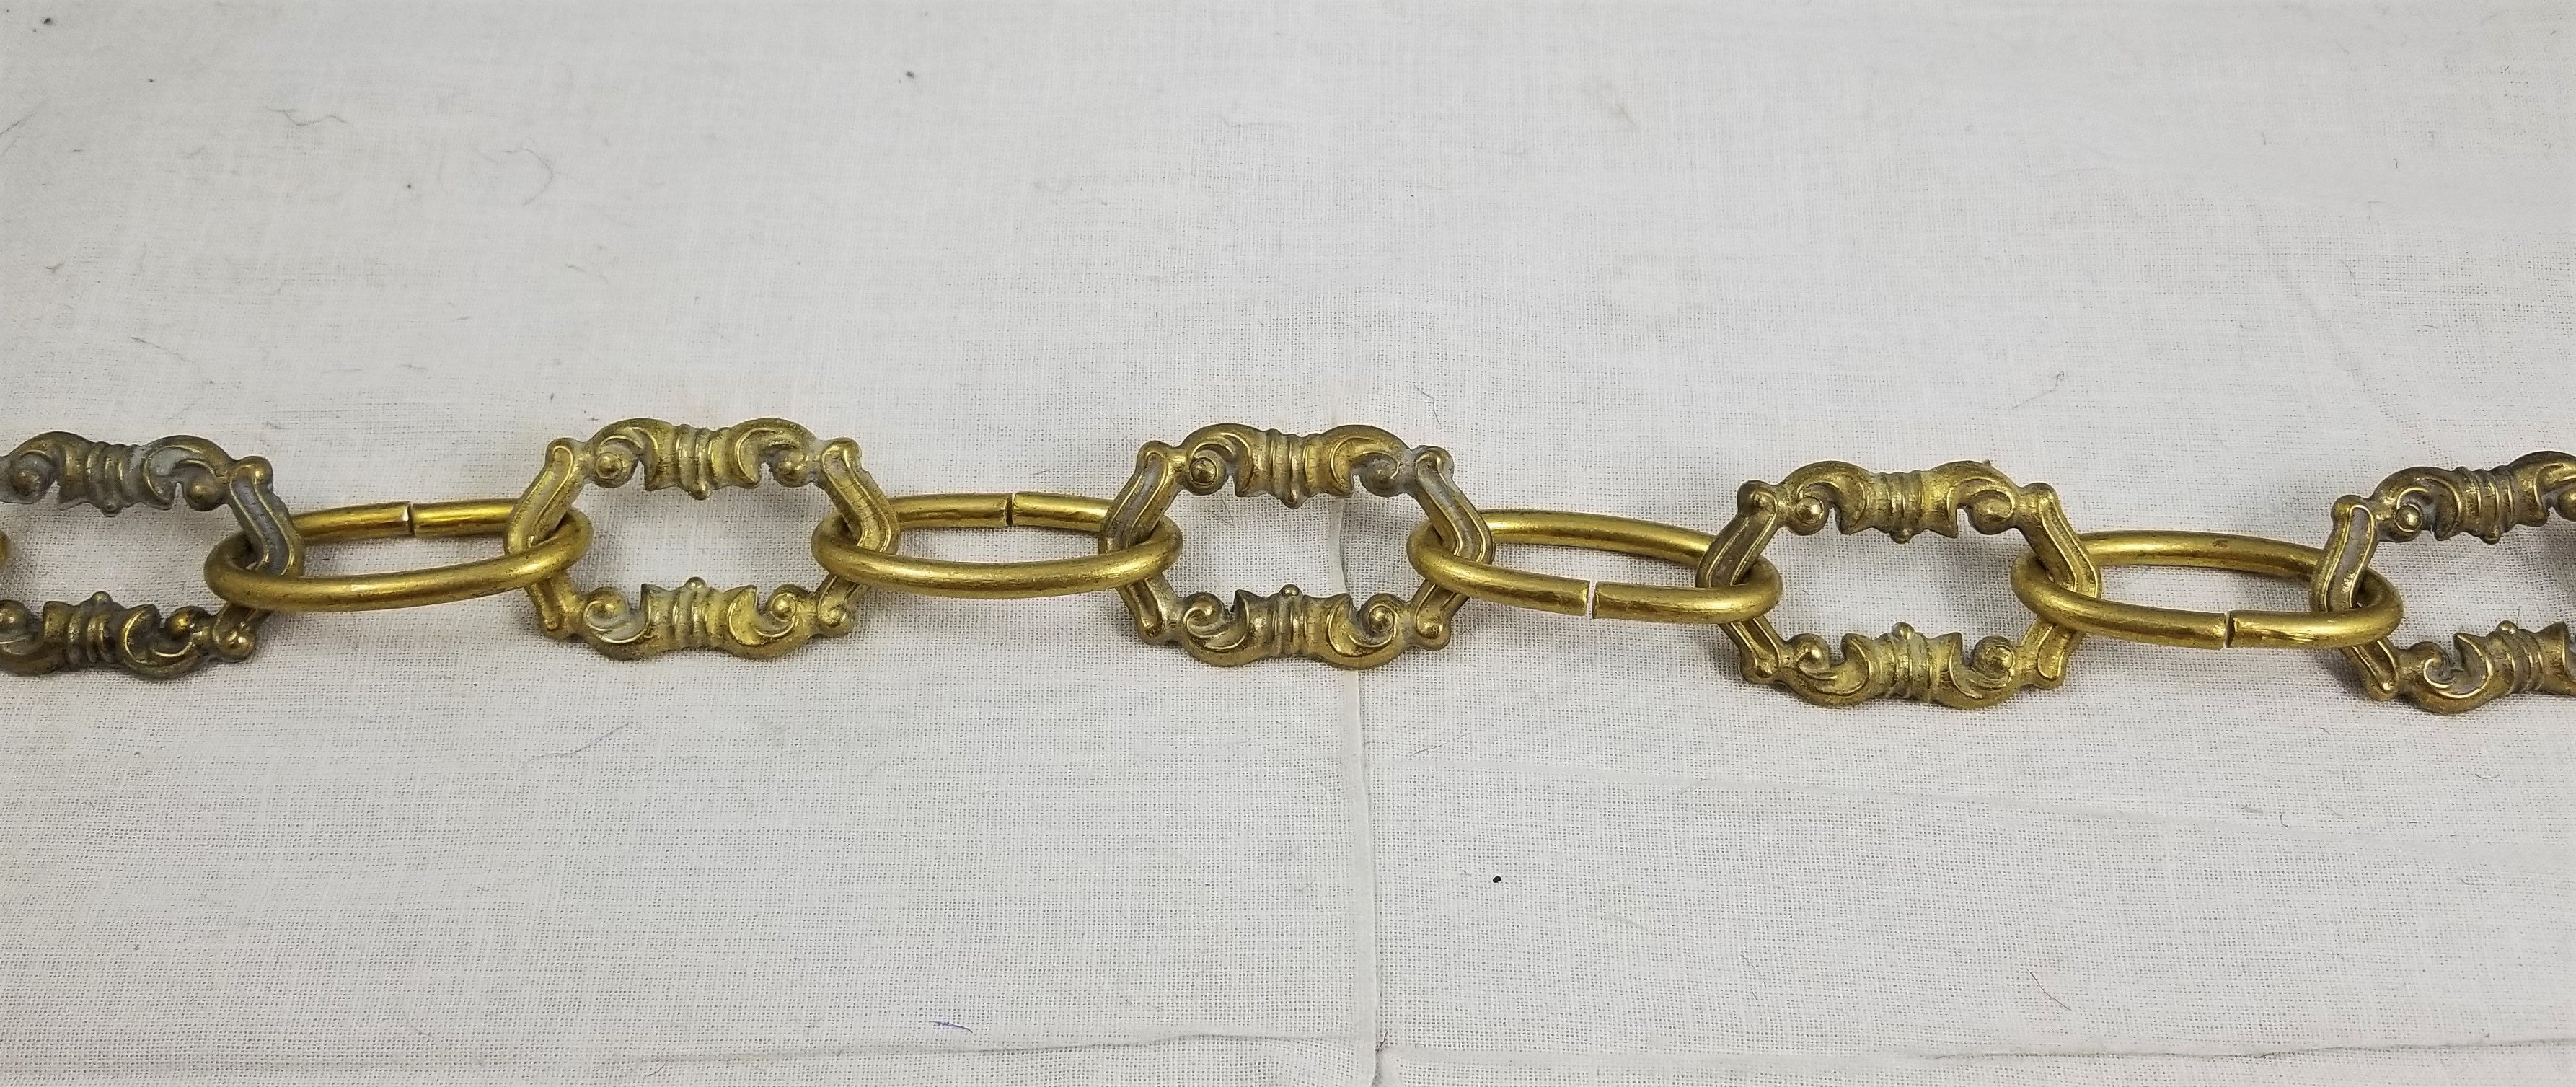 Handmade 1-3/4'' Solid Brass Chain